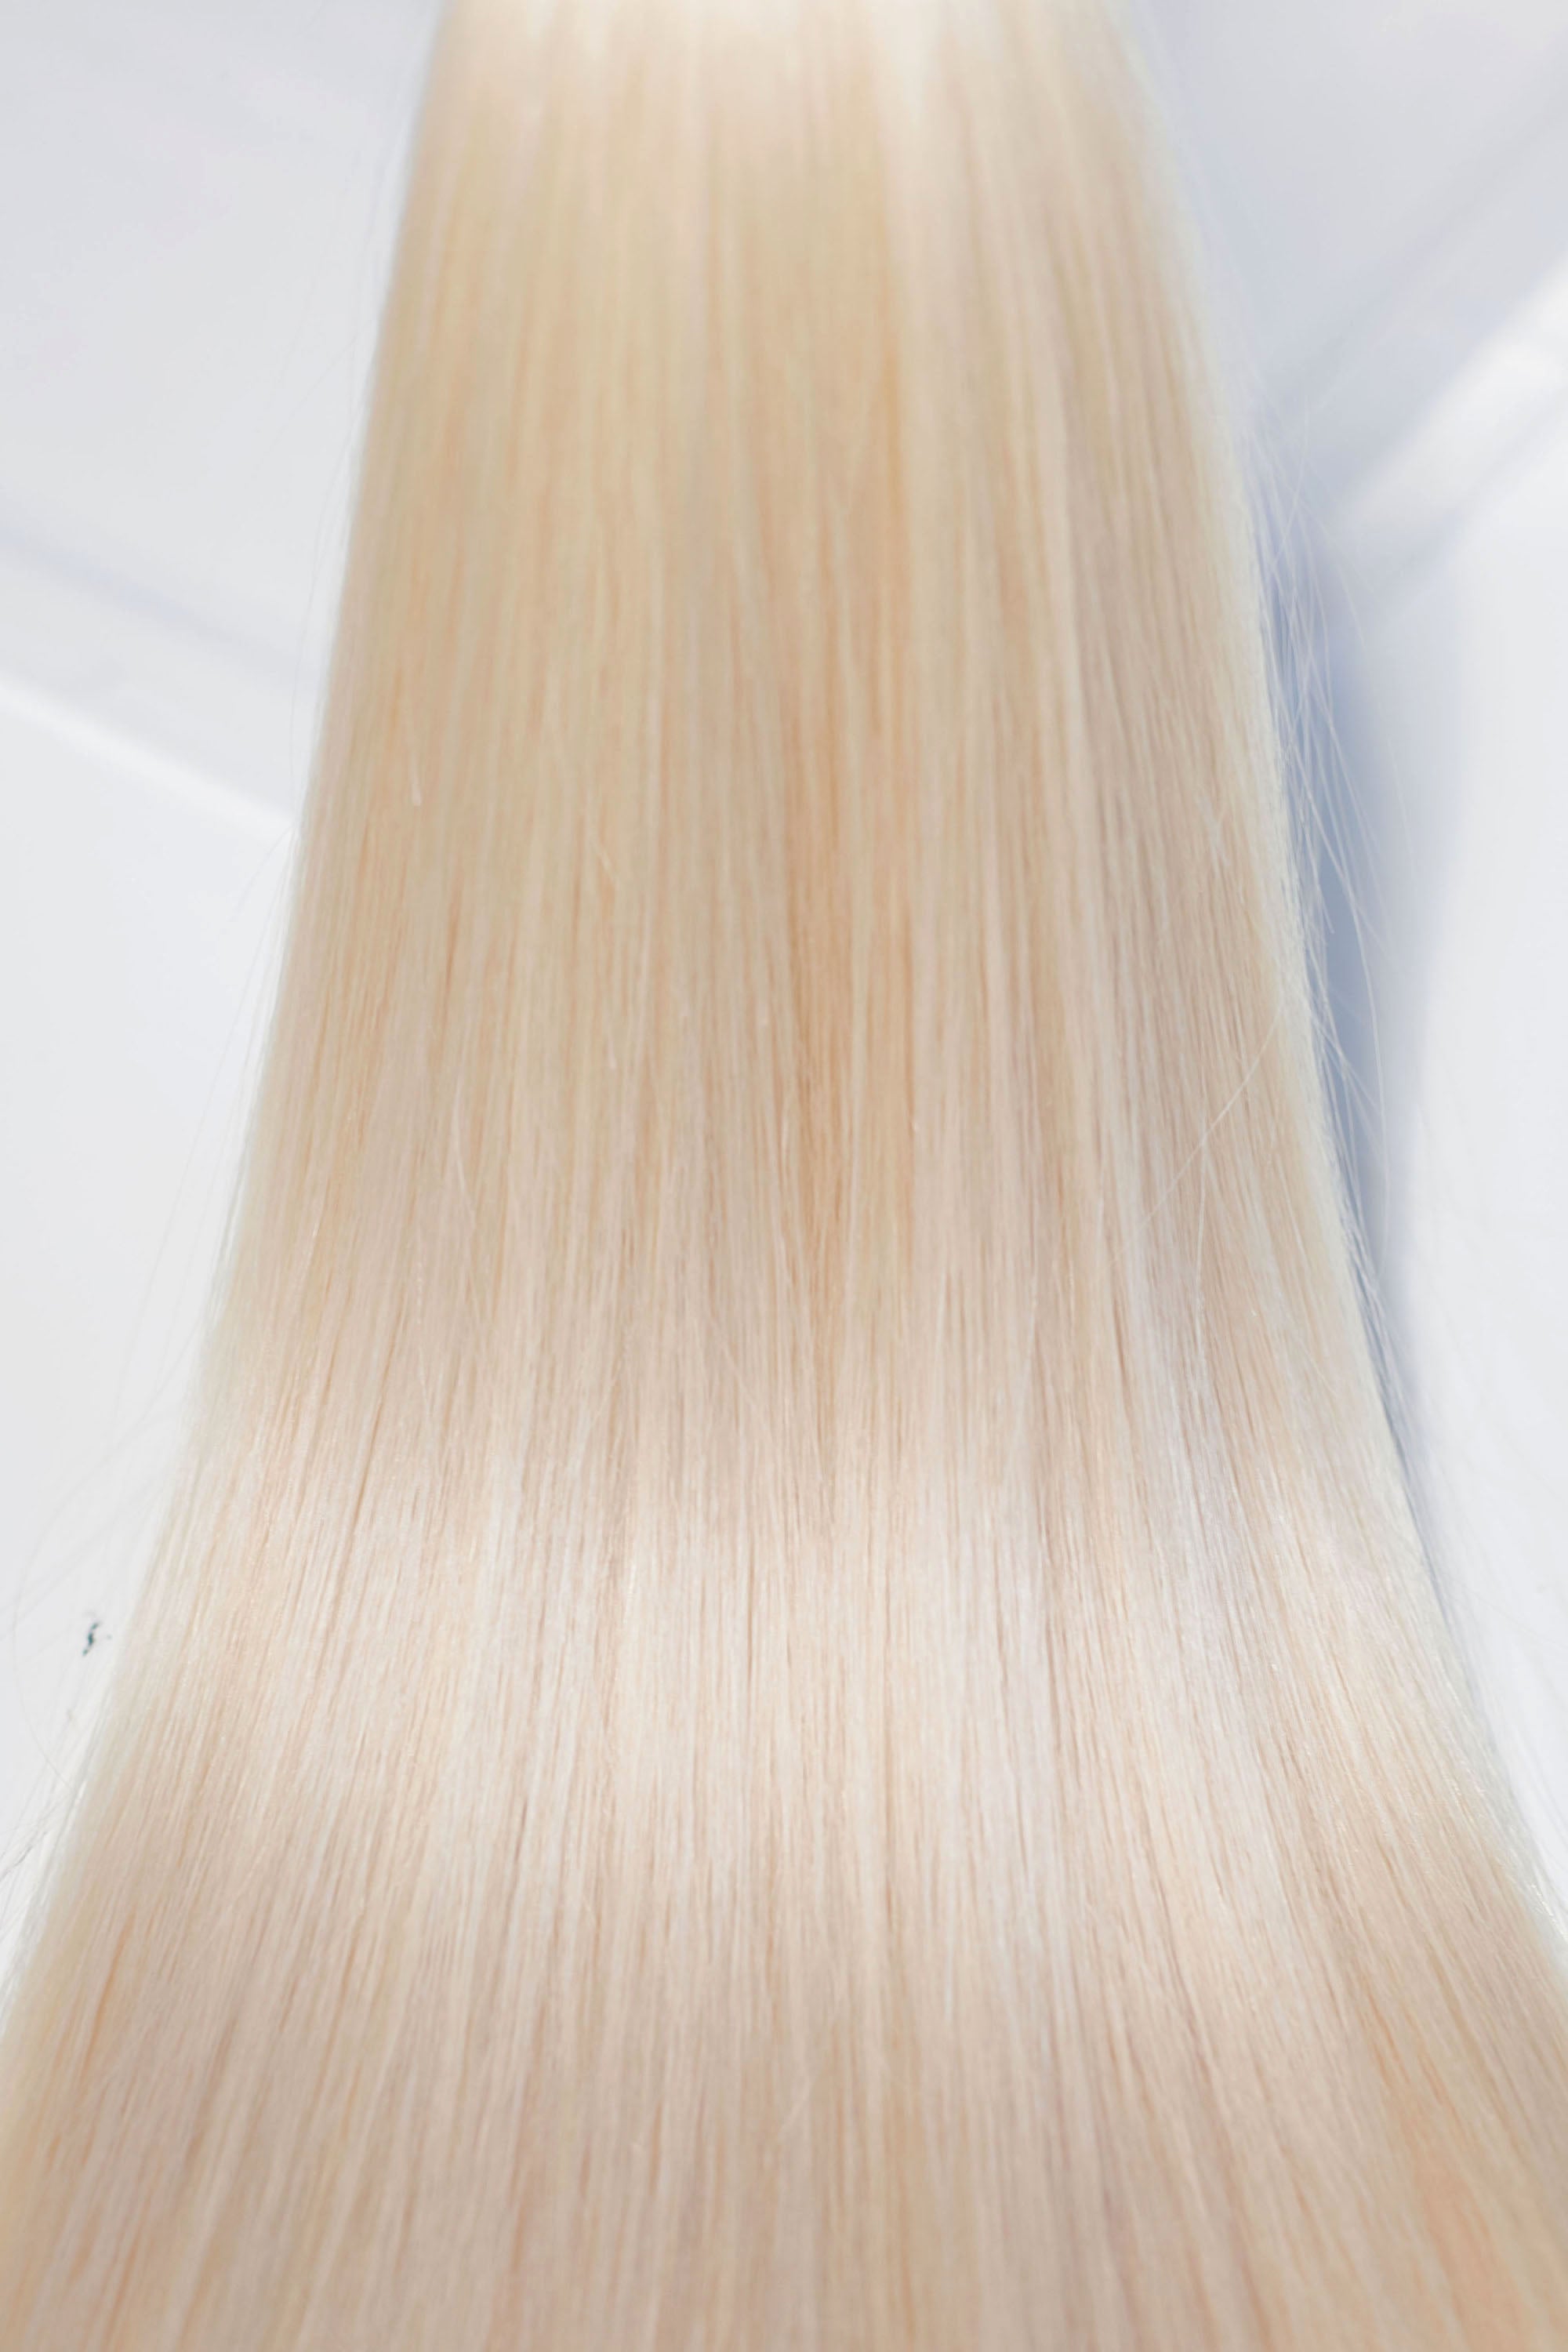 Behair professional Keratin Tip "Premium" 26" (65cm) Natural Straight Ice Blond #000 - 25g (Micro - 0.5g each pcs) hair extensions